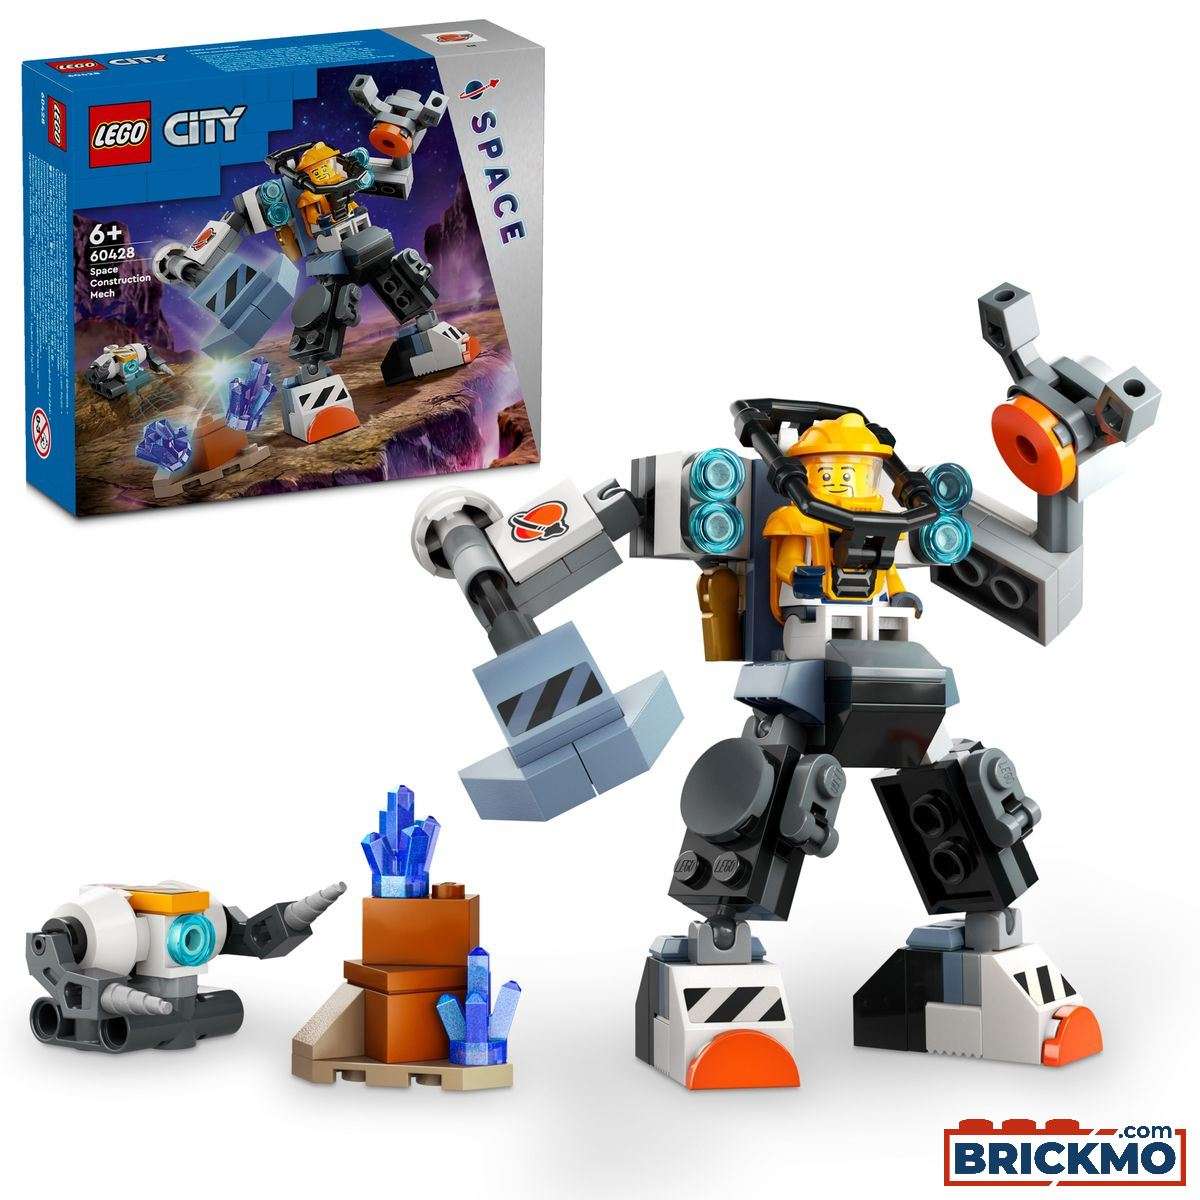 LEGO City 60428 Space Construction Mech 60428